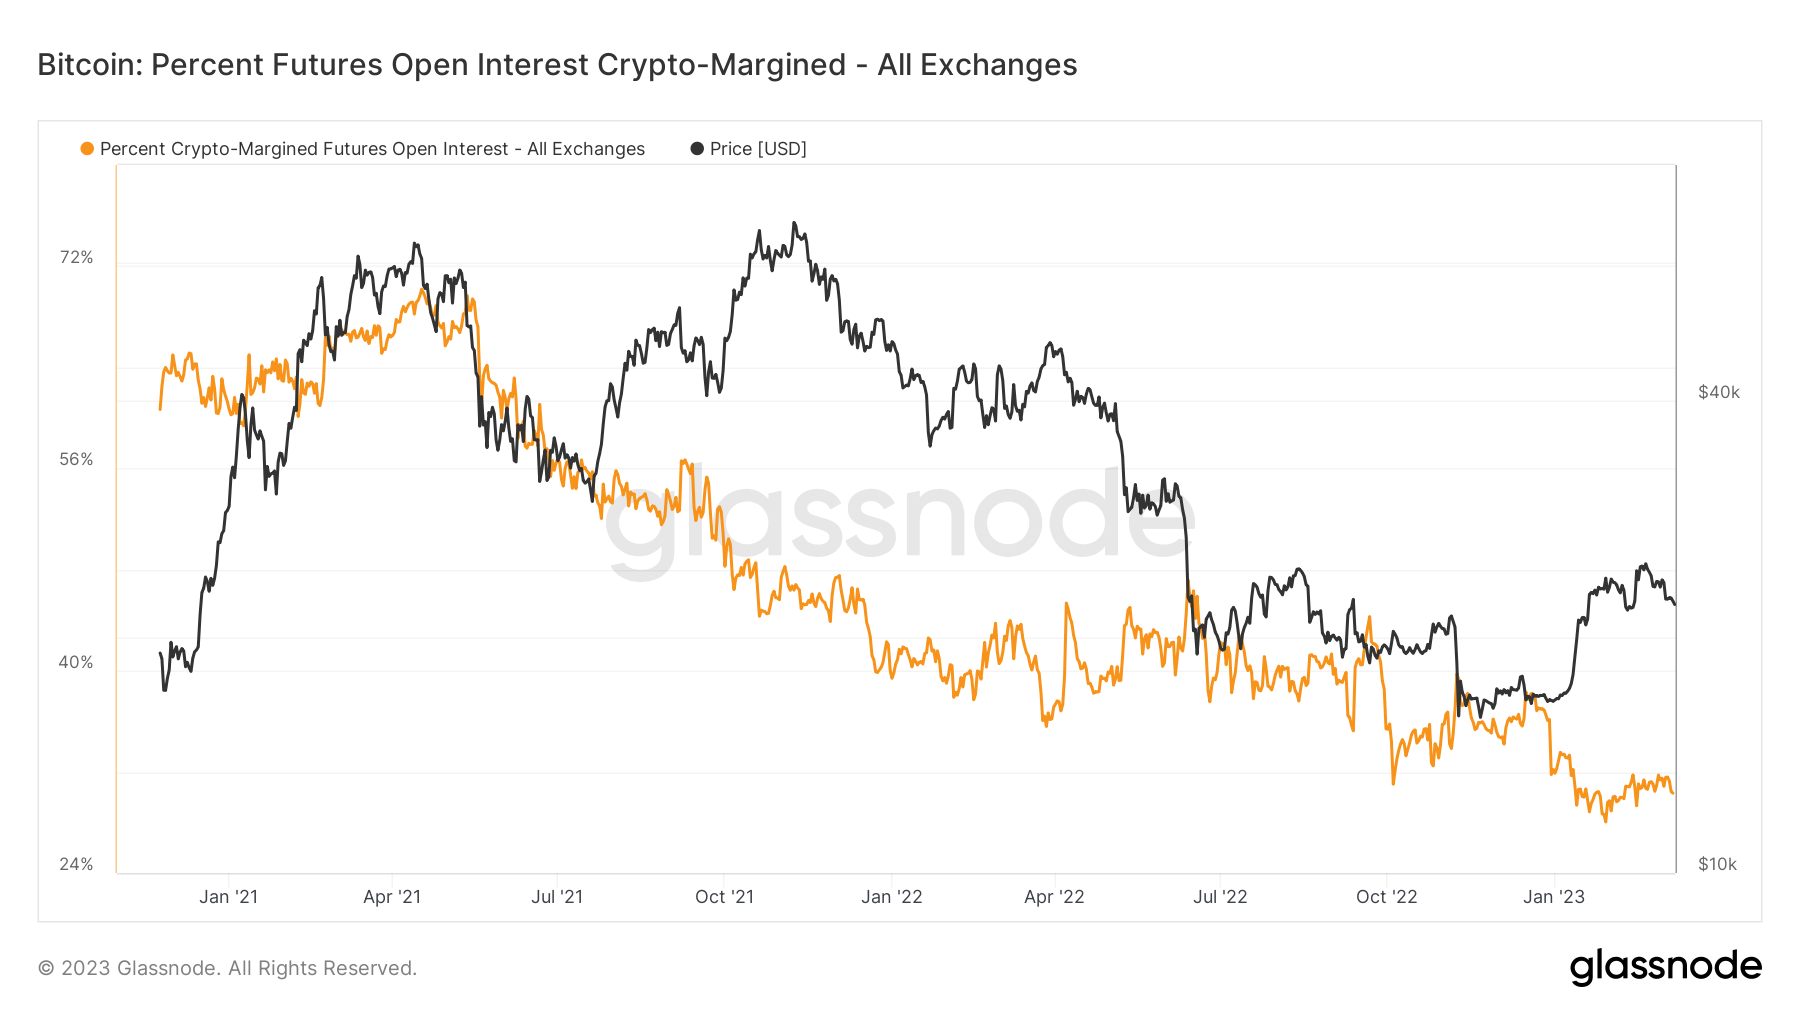 Futures Open Interest Crypto Margined: (Kilde: Glassnode)